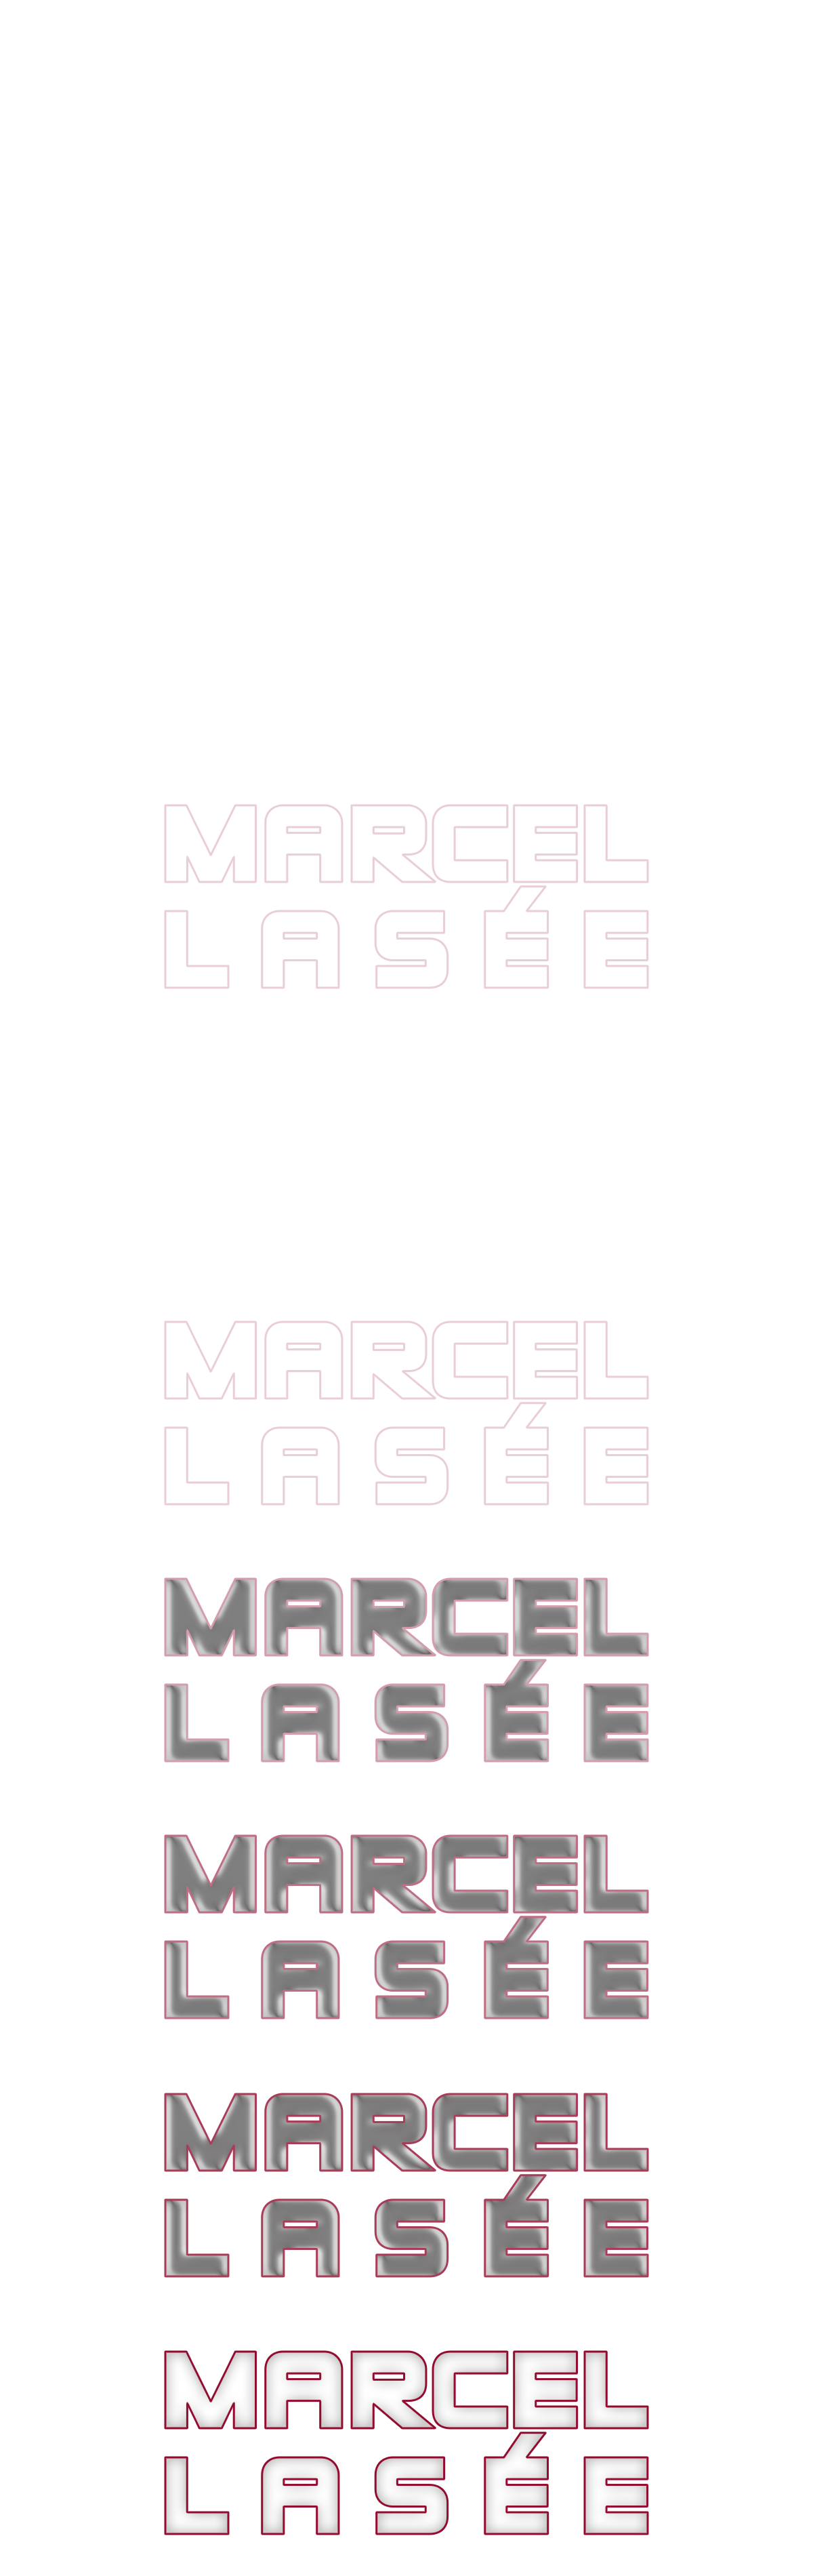 marcel lasee